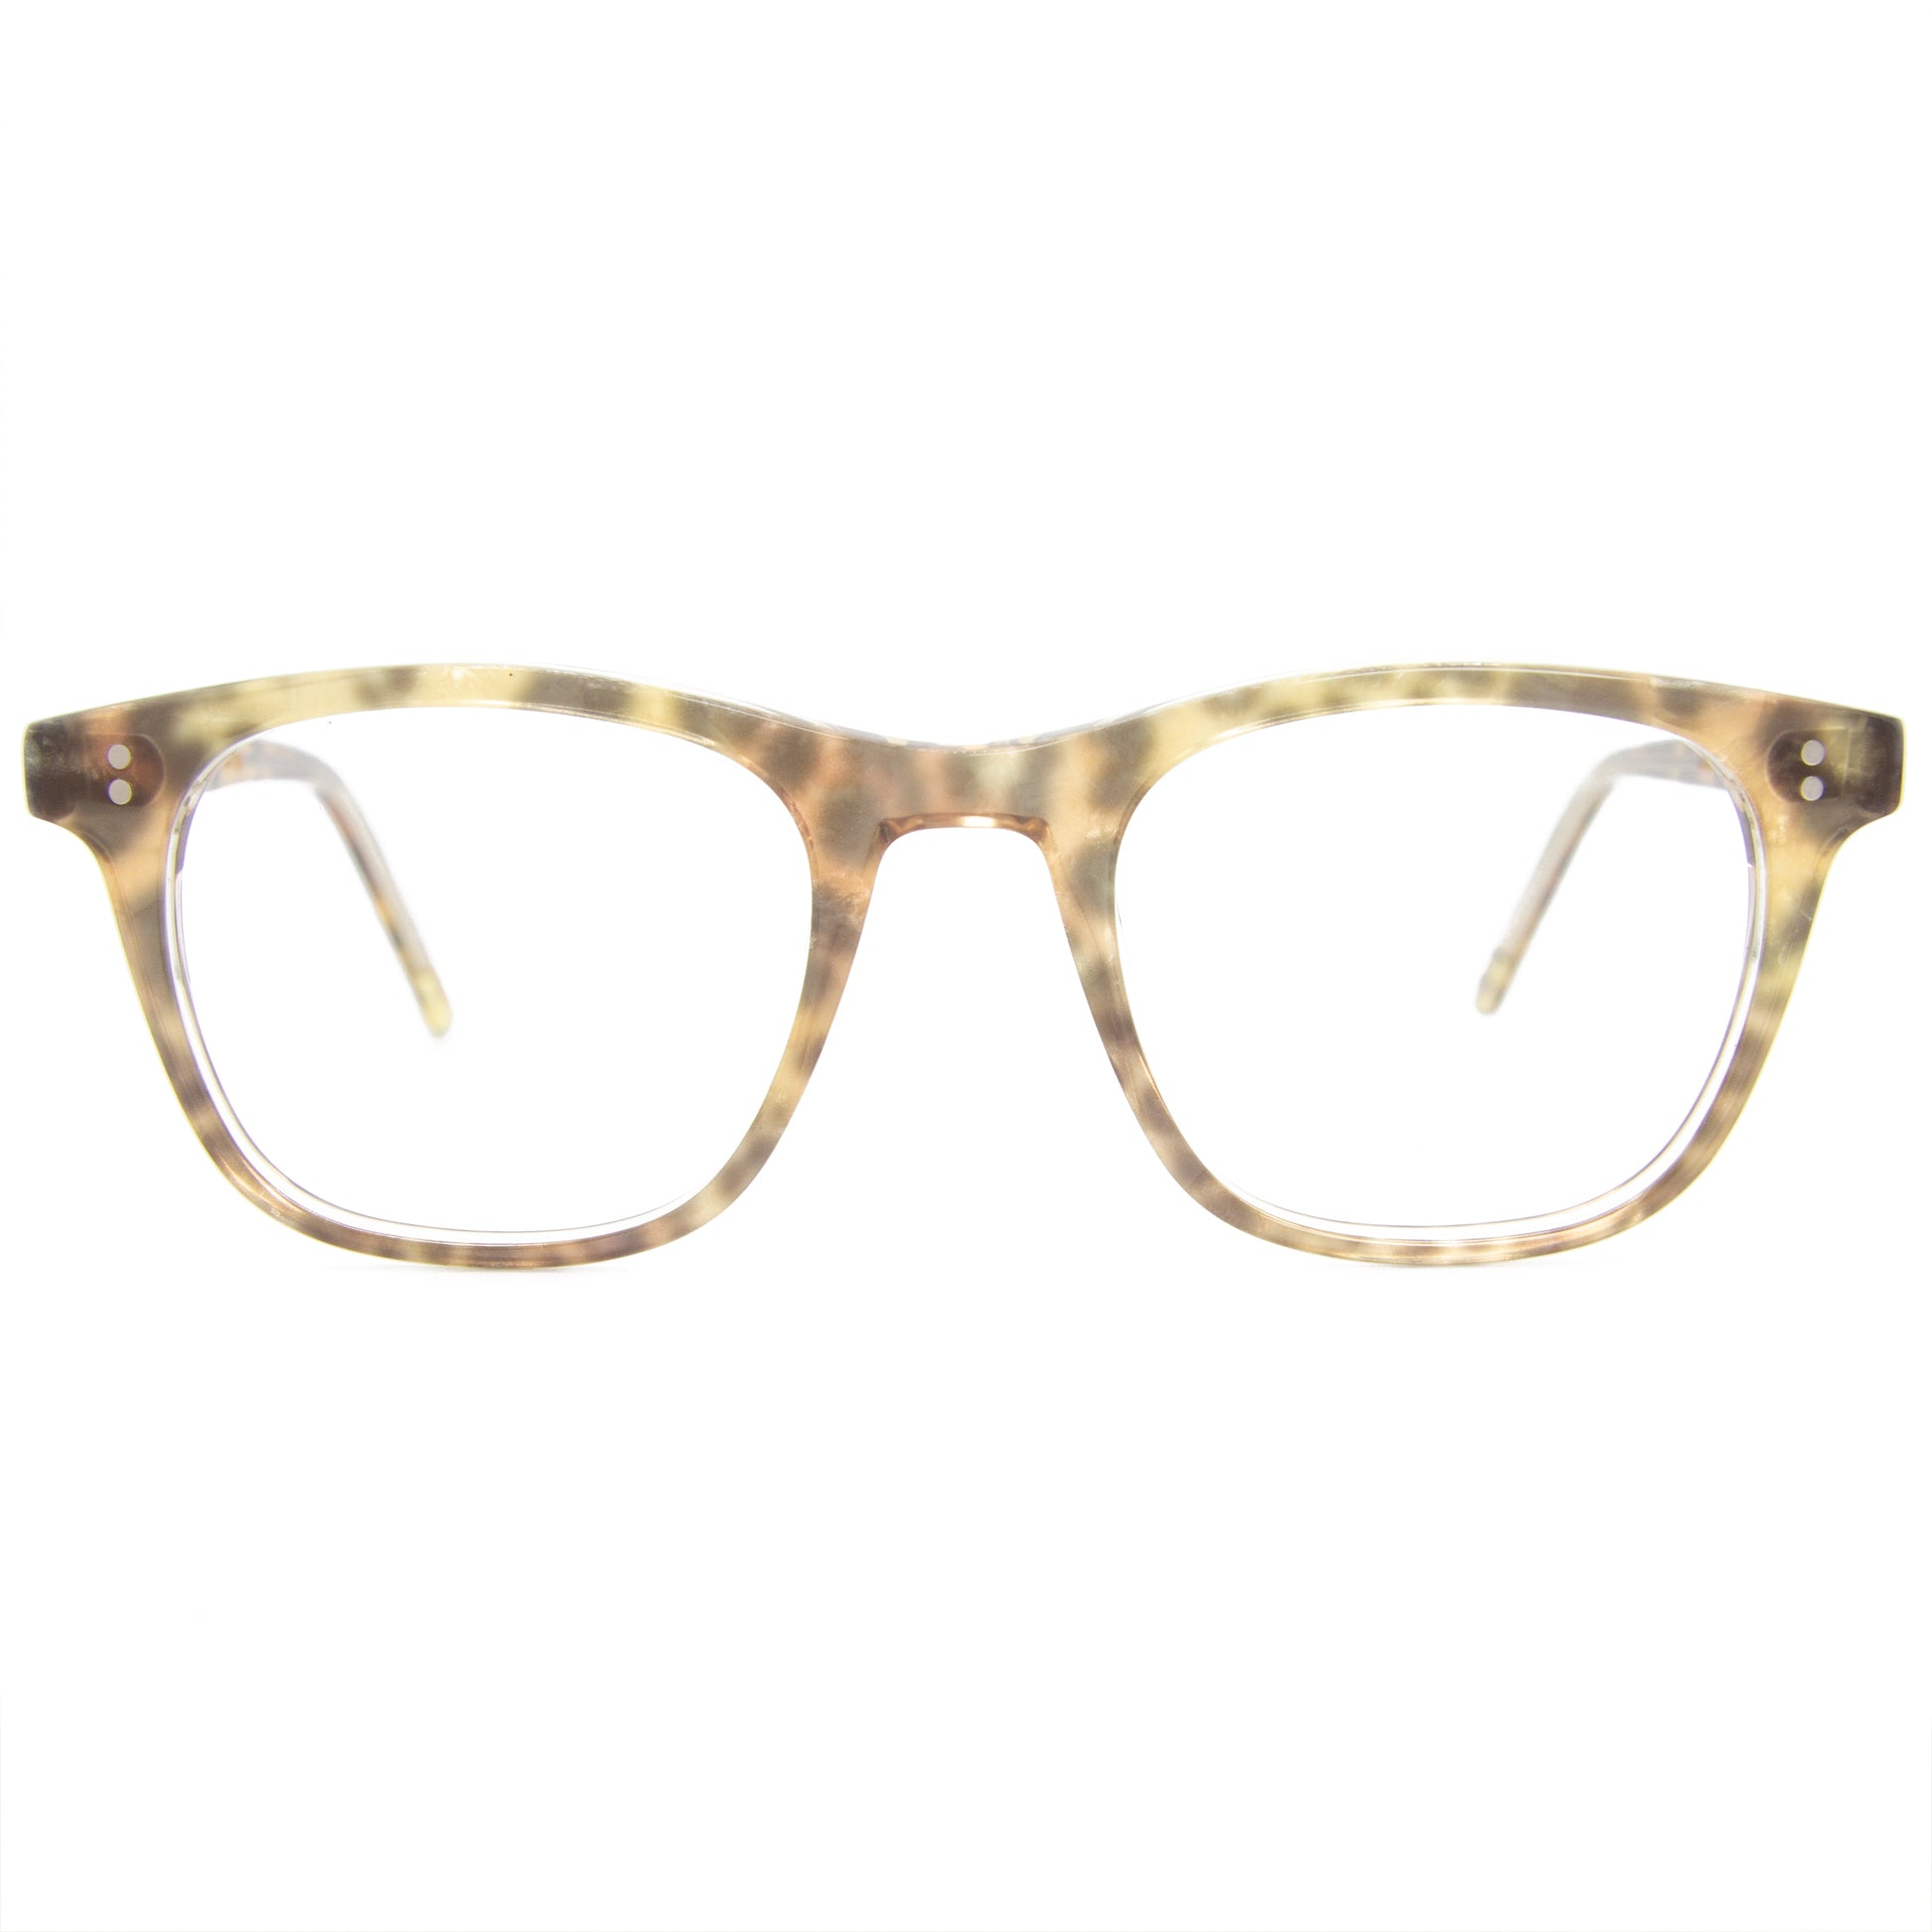 3 brothers - Yai Yai Alki - Leopard - Prescription Glasses